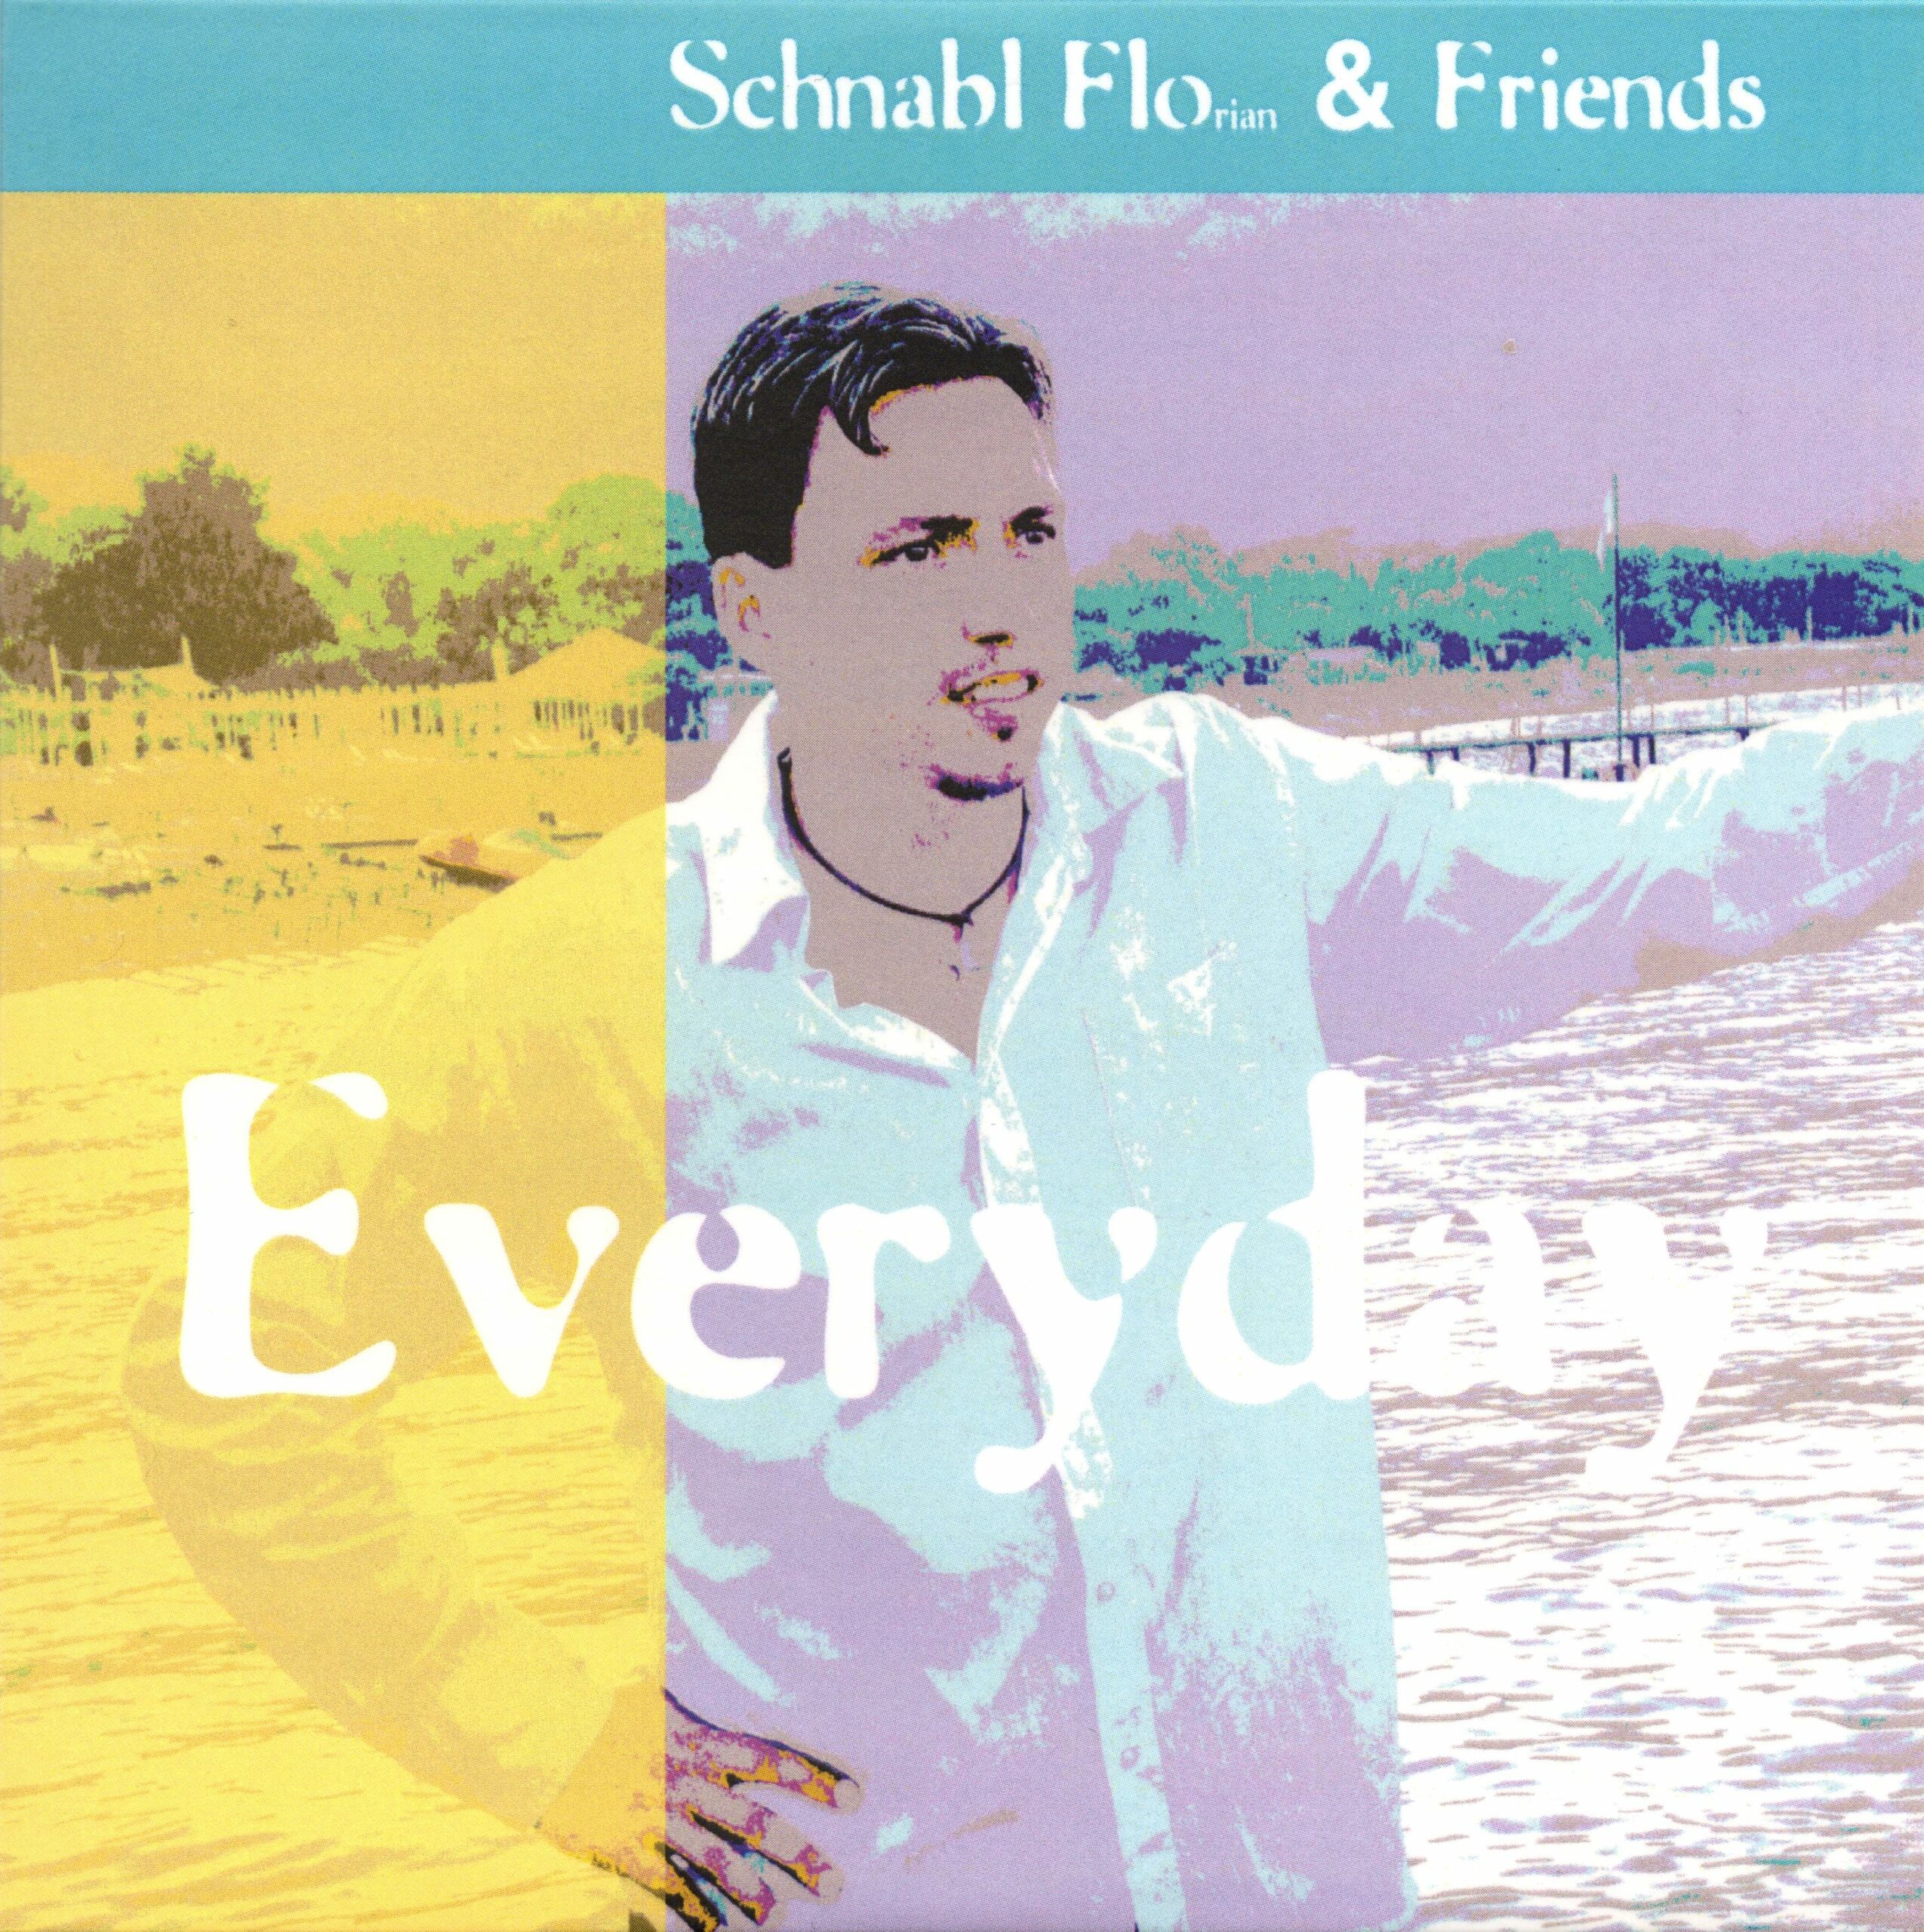 Schnabl Florian & Friends – “Everday” (2012)